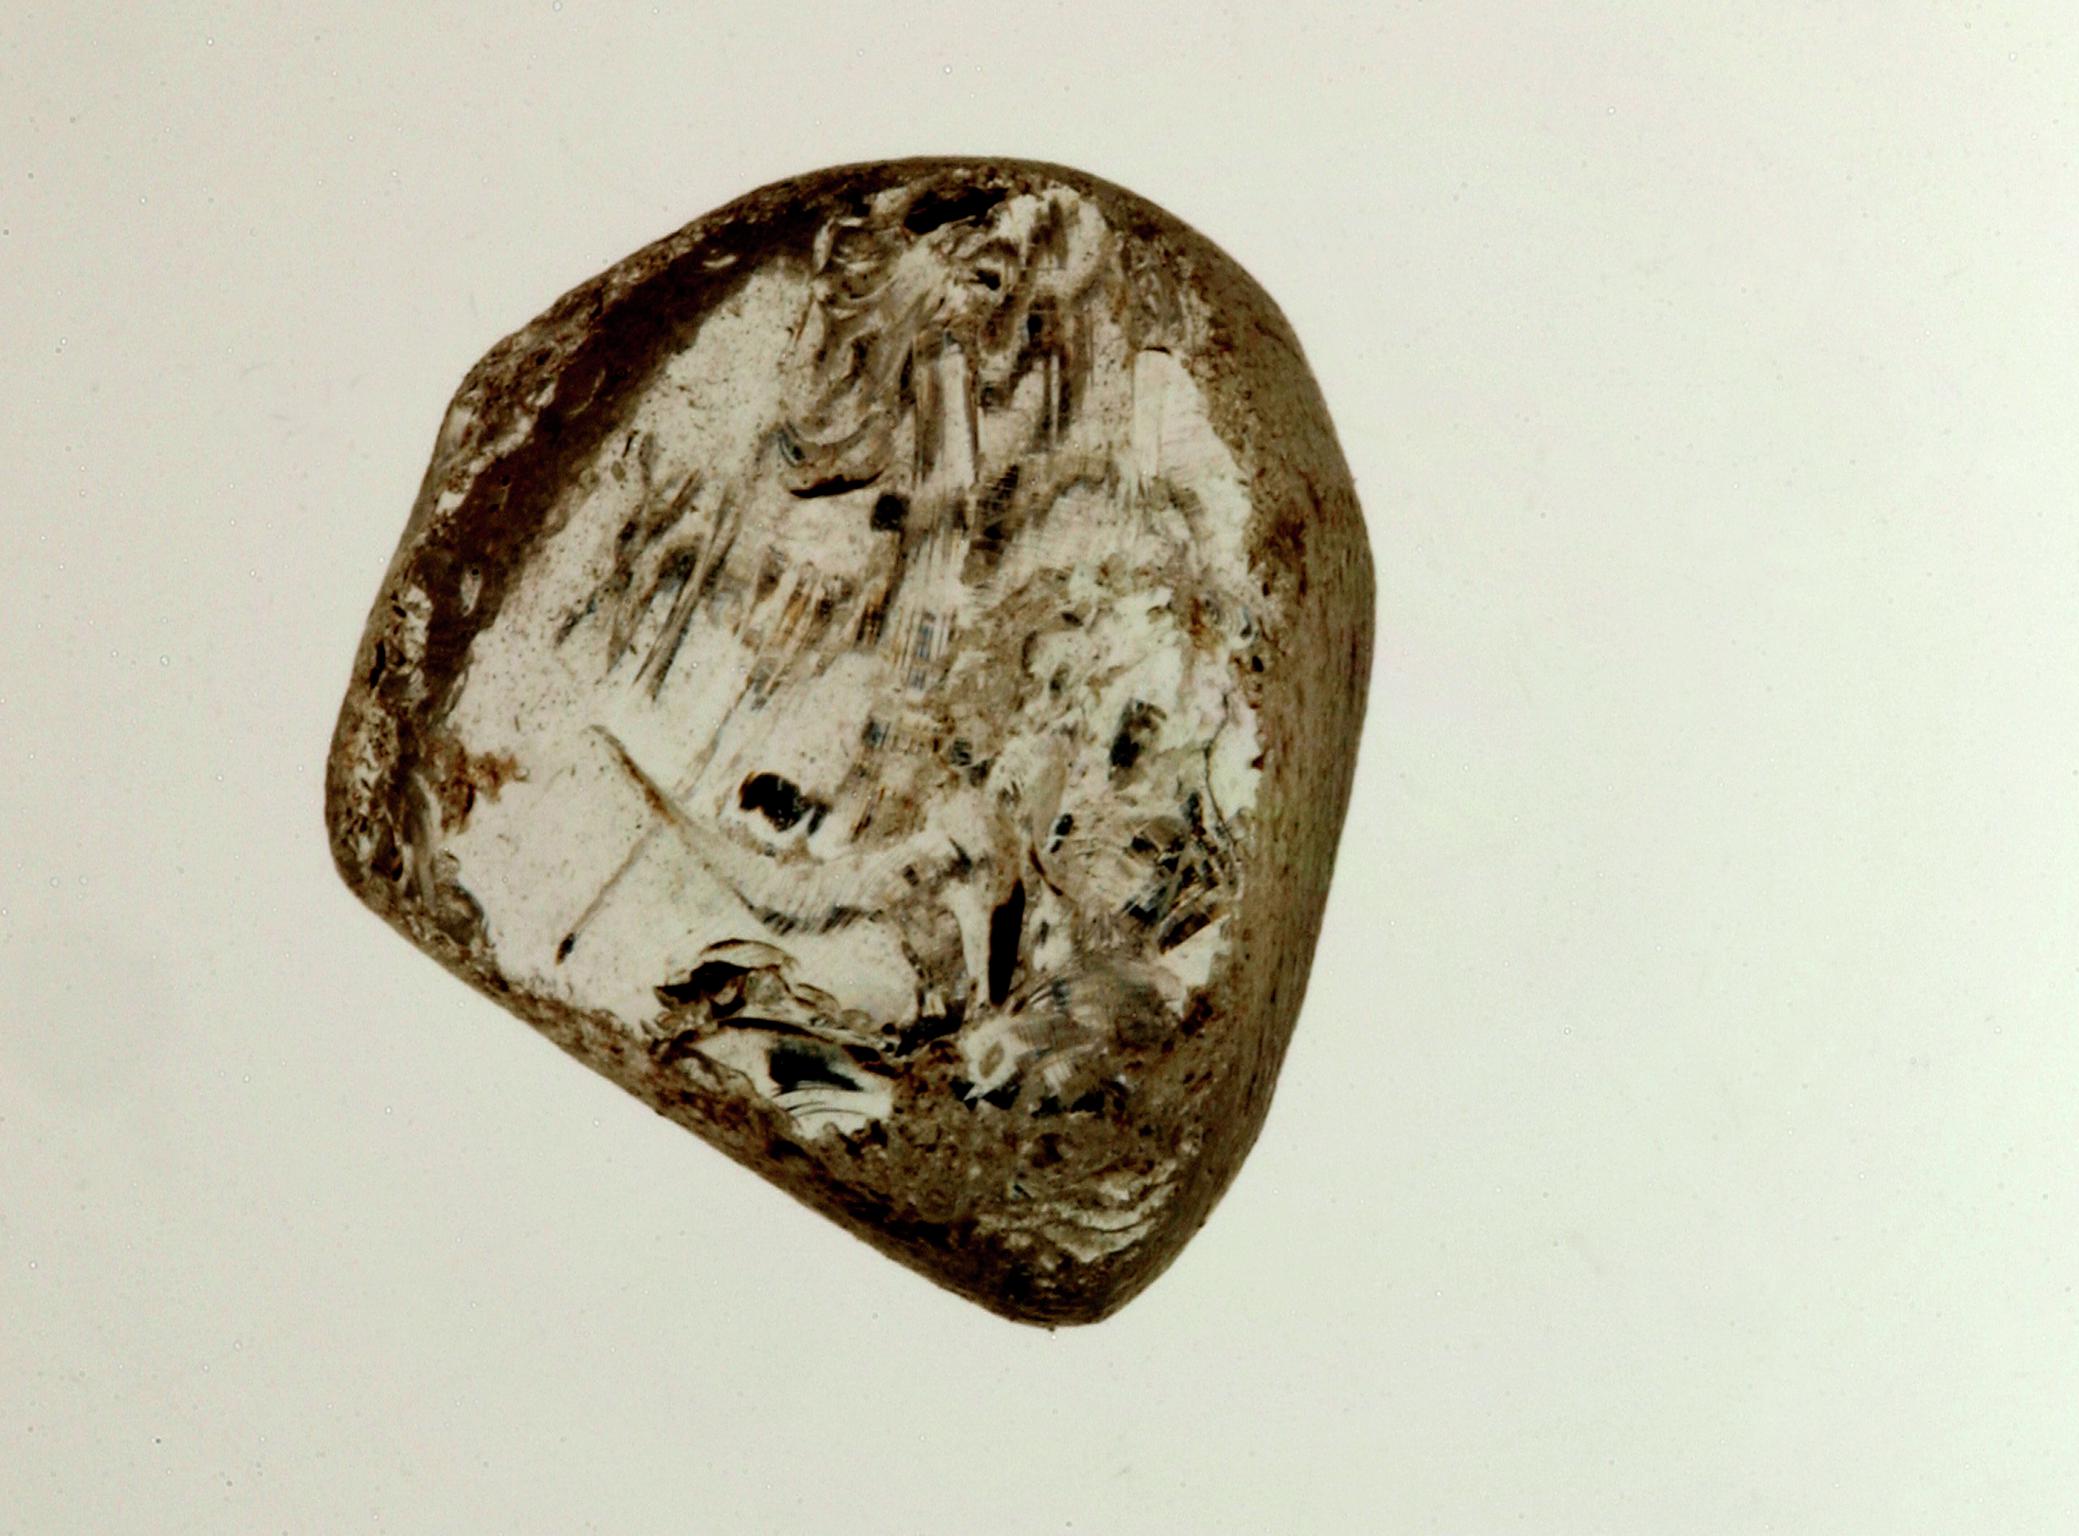 Hydrophobic stone